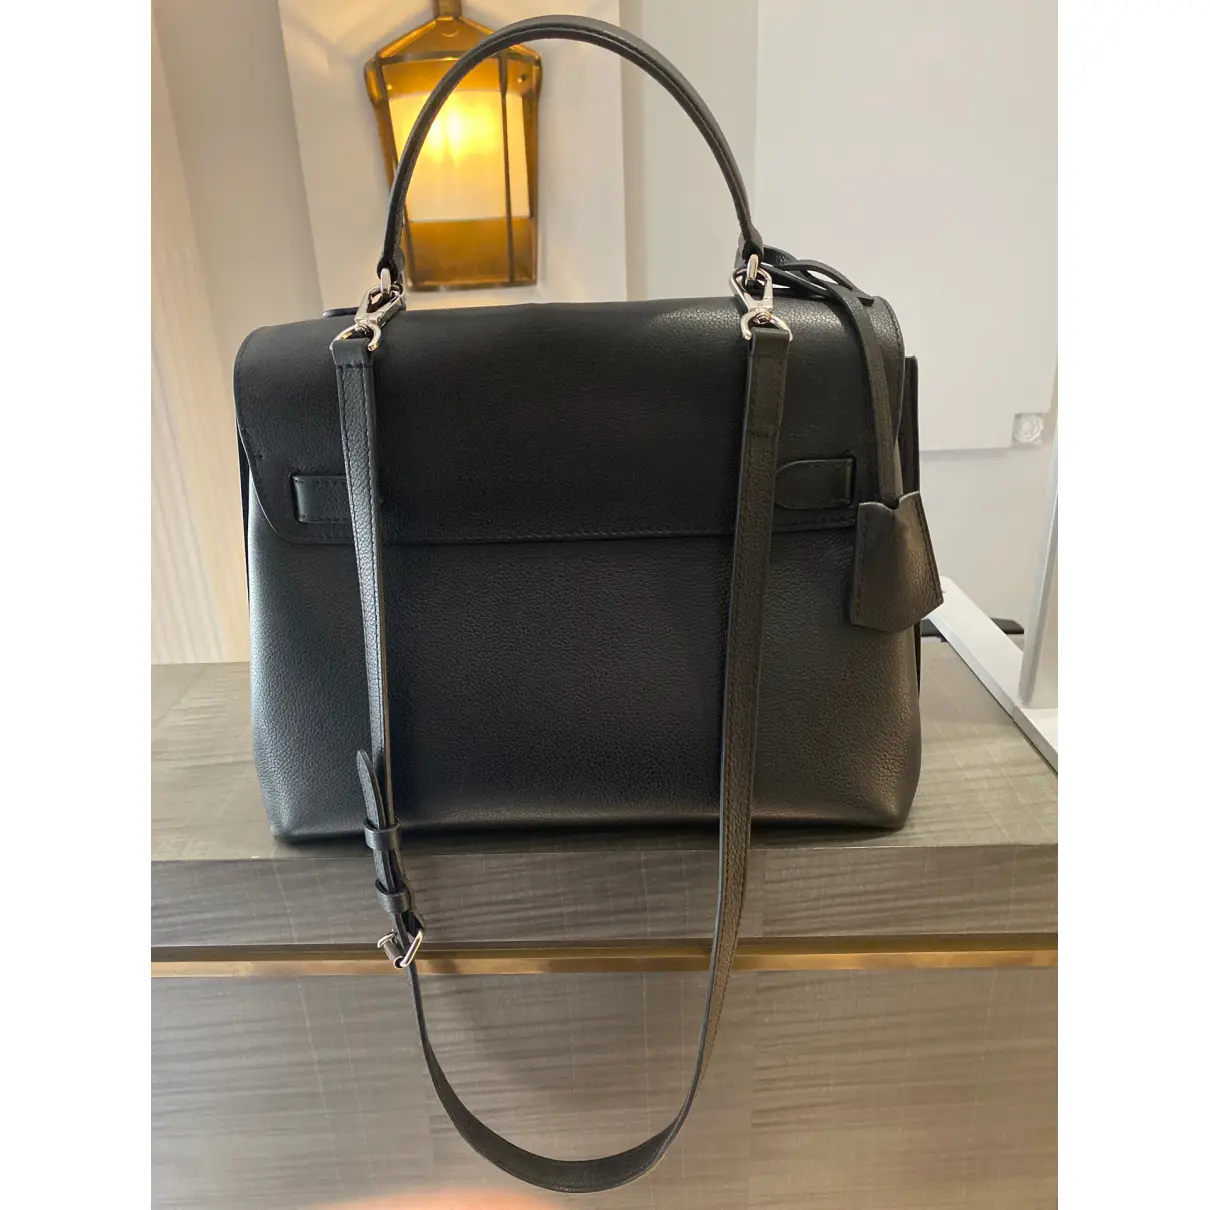 Buy Louis Vuitton Lockme Ever leather handbag online